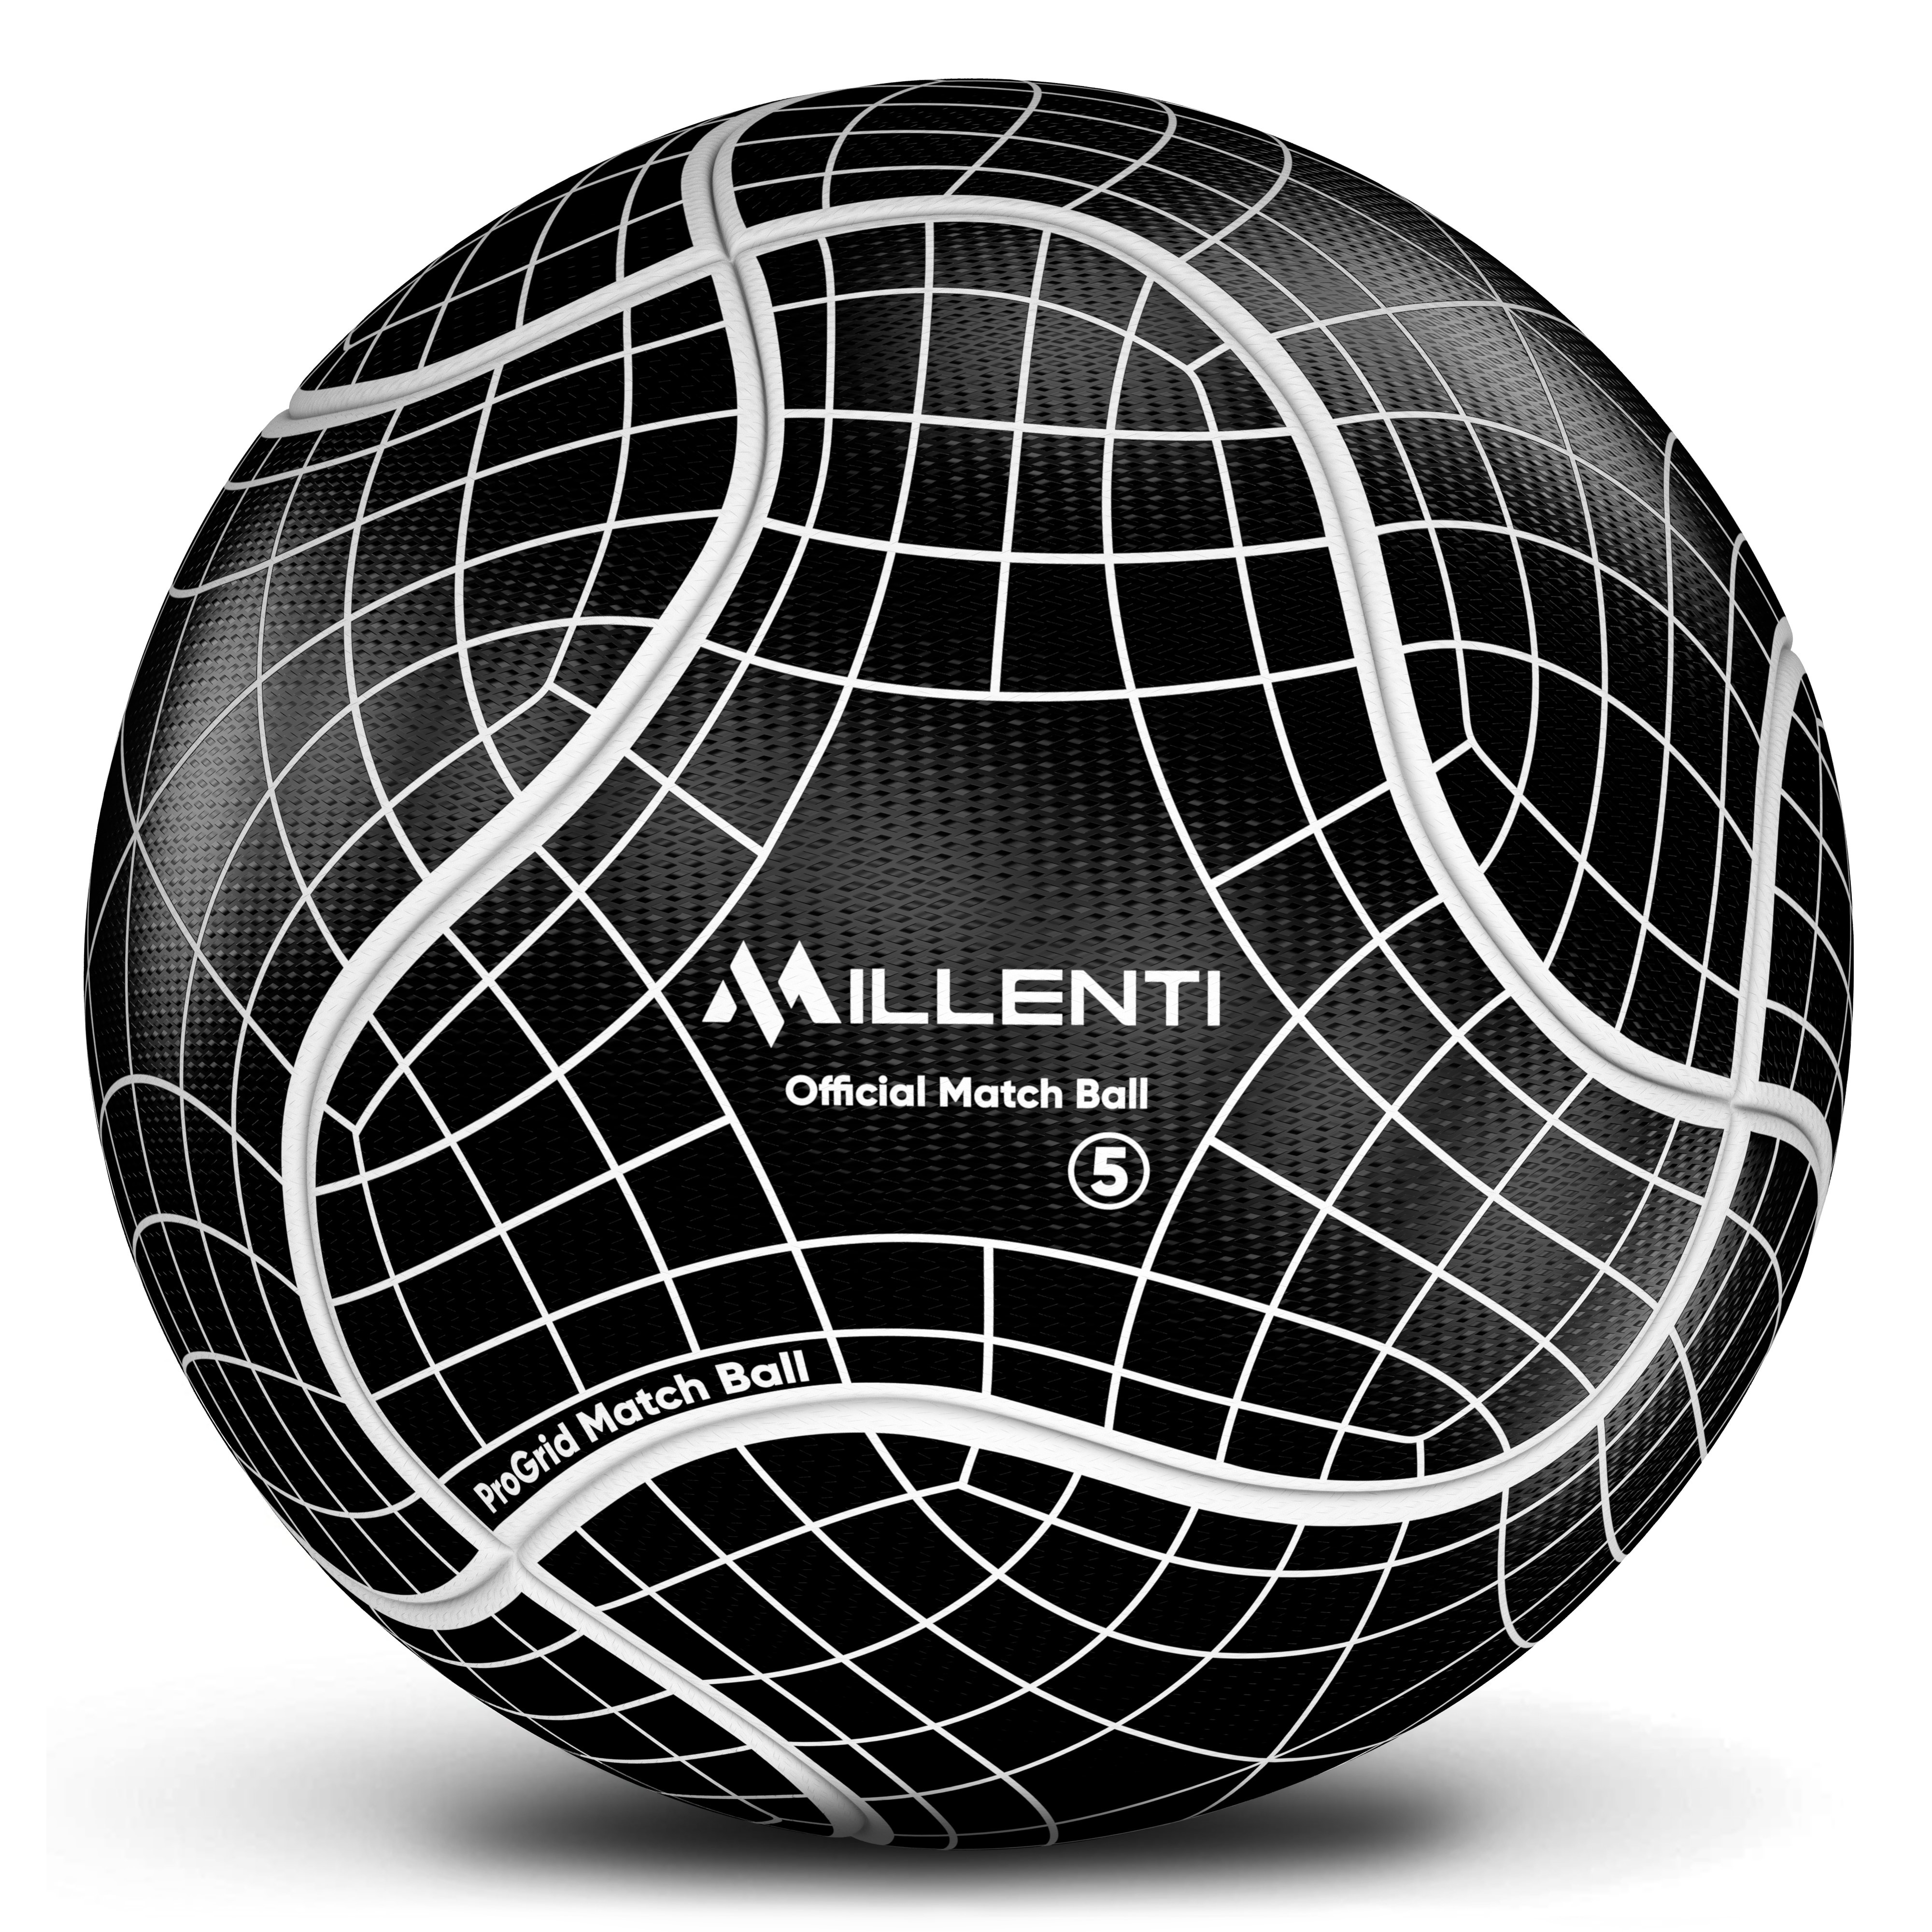 ProFrame Official Match Soccer Ball Millenti Soccer Balls Size 5 